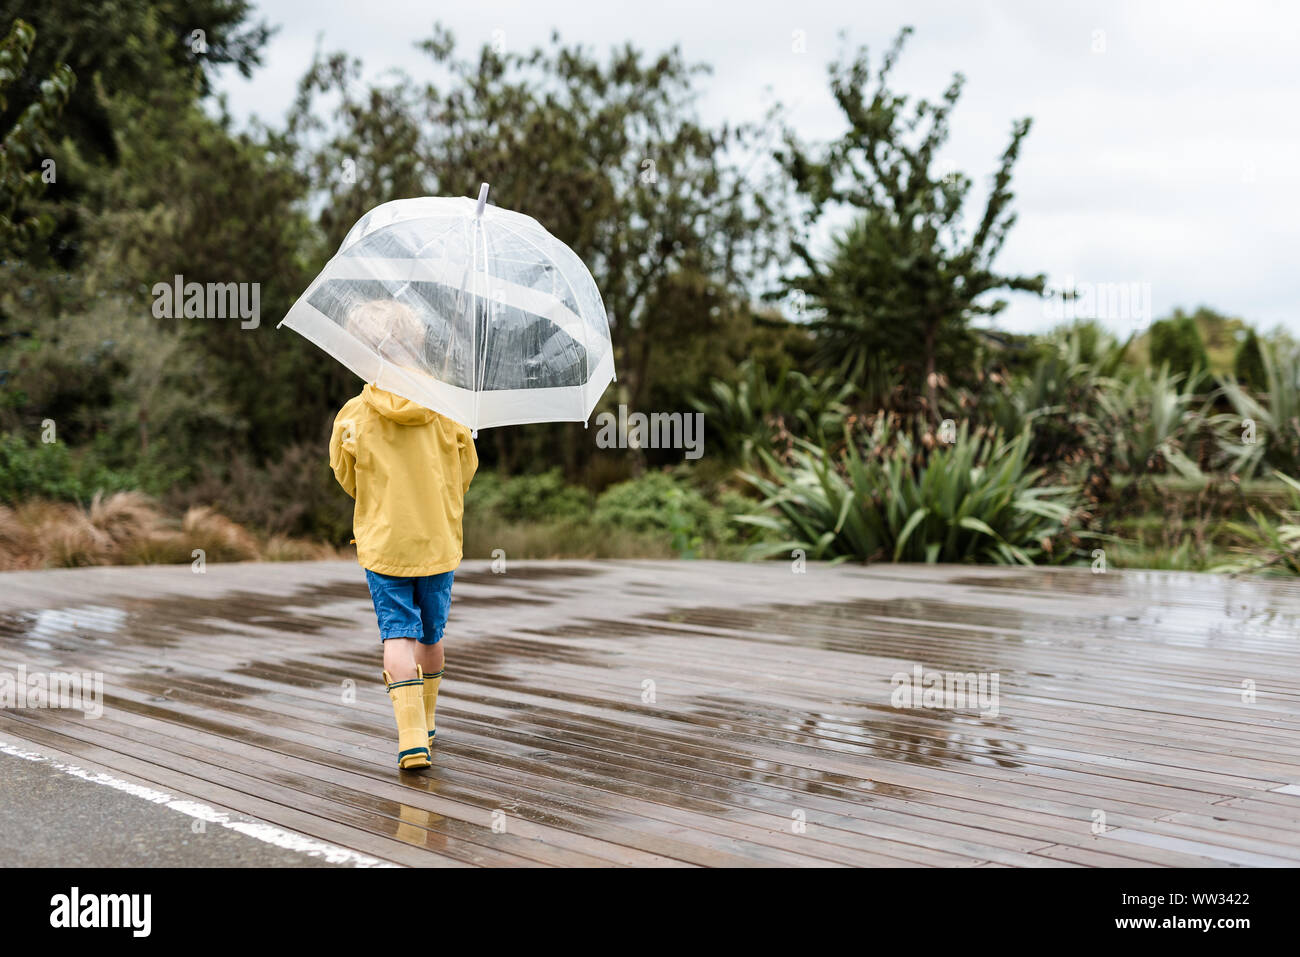 Child in yellow rain jacket holding an umbrella Stock Photo